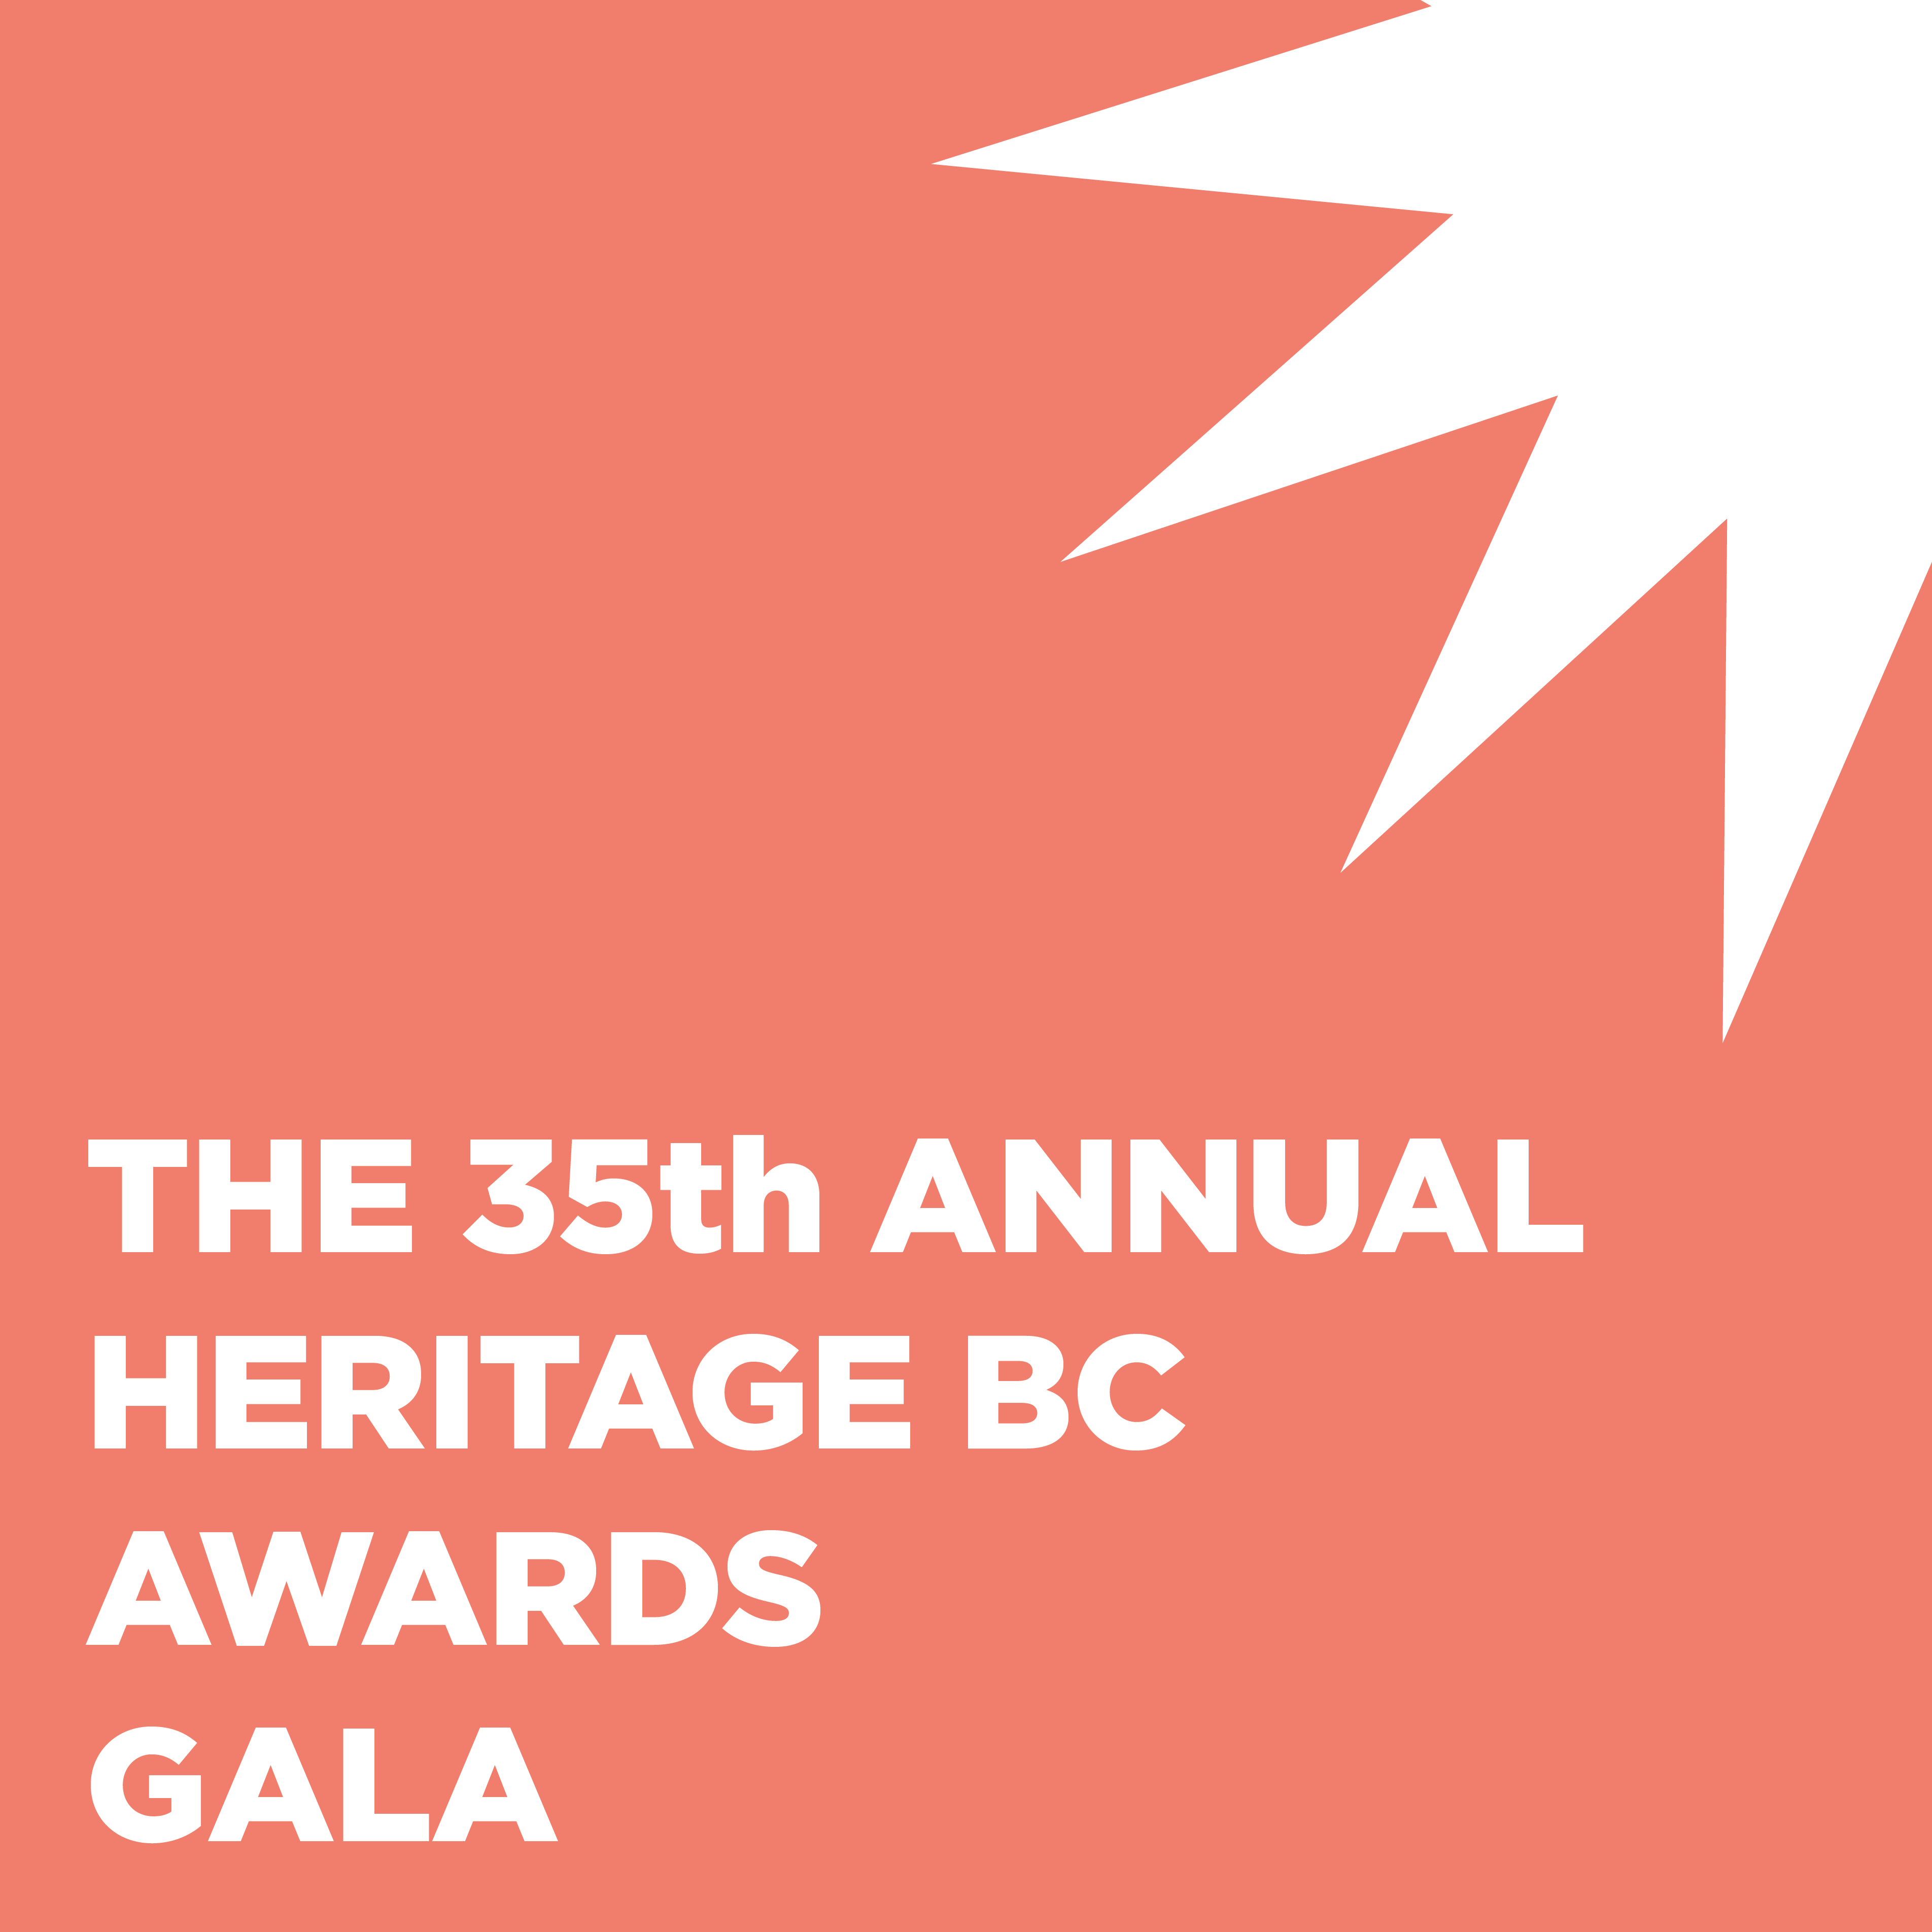 35th annual heritage BC awards gala logo